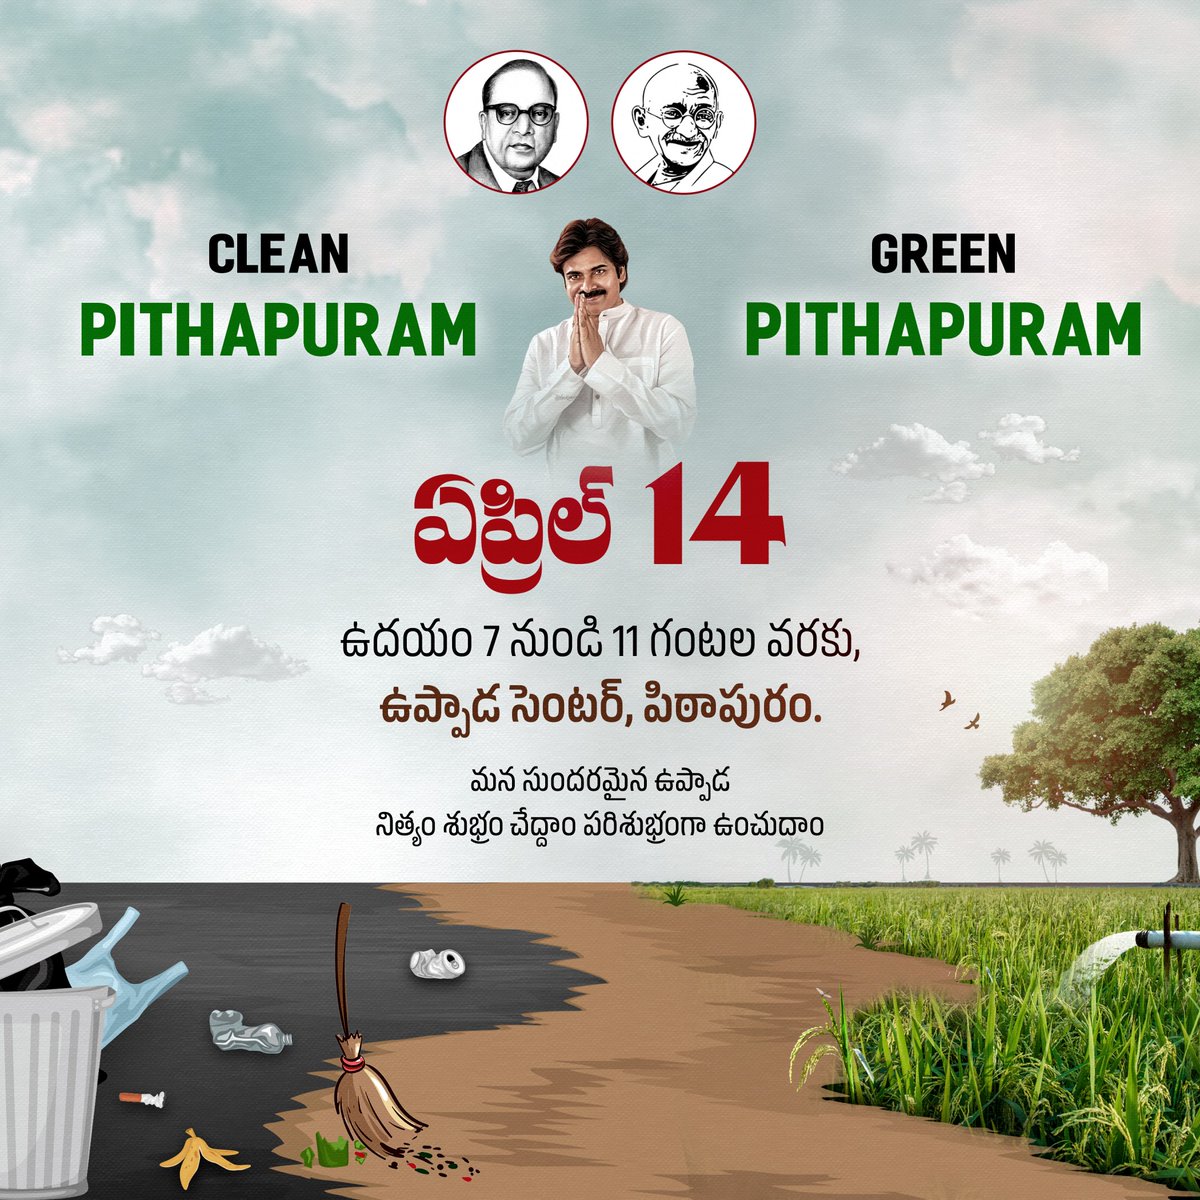 'Clean Pithapuram - Green Pithapuram' • మన సుందరమైన ఉప్పాడ నిత్యం శుభ్రం చేద్దాం పరిశుభ్రంగా ఉంచుదాం.. • రేపు (ఏప్రిల్ 14) ఉదయం 7 నుండి 11 గంటల వరకు, ఉప్పాడ సెంటర్, పిఠాపురం. @PawanKalyan @pithapuramjsp #CleanPithapuramGreenPithapuram